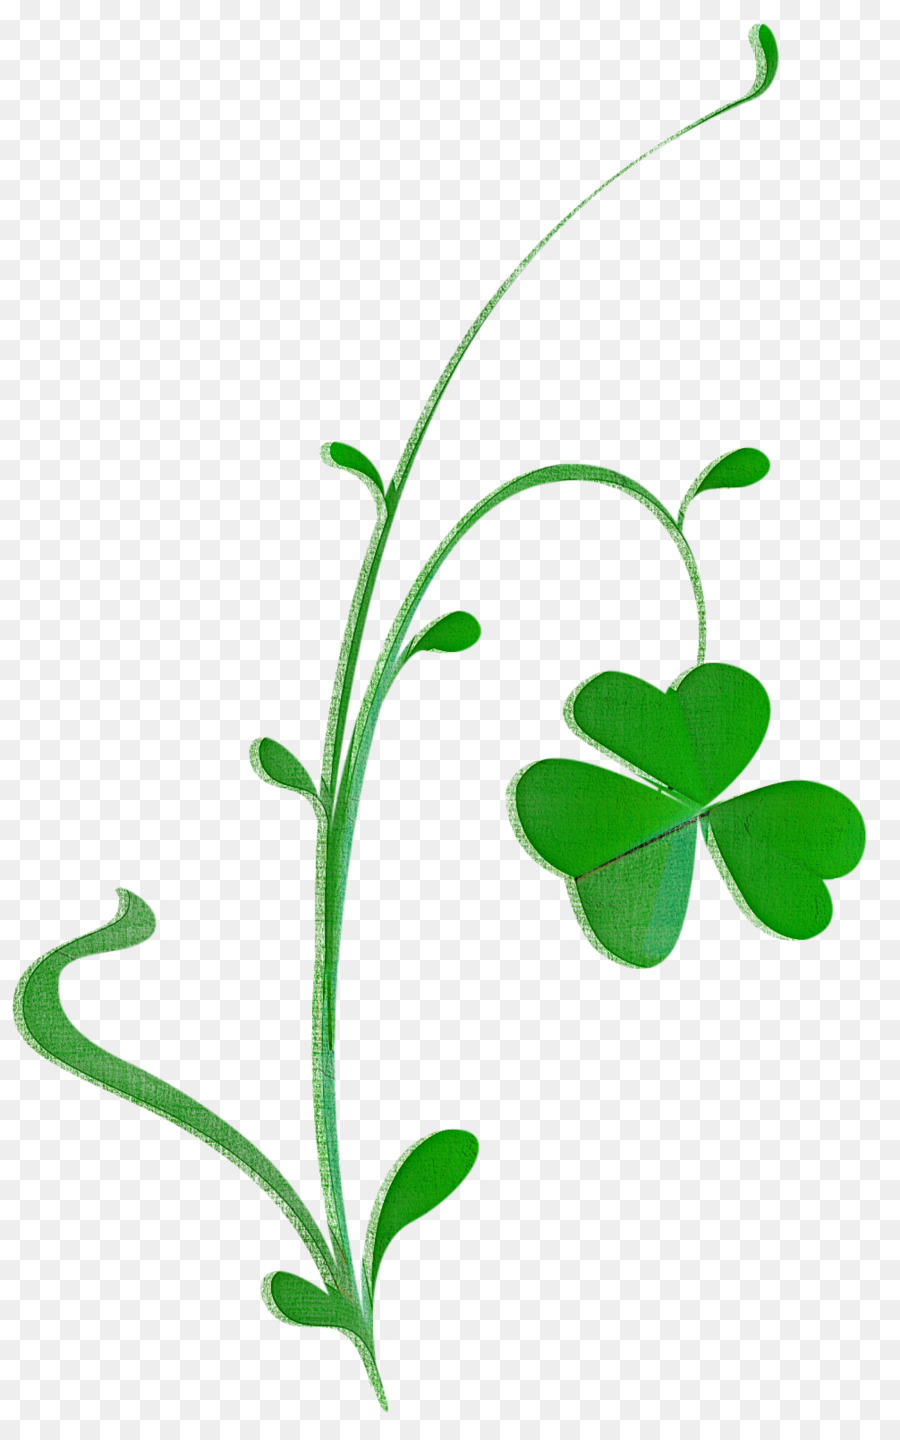 St. Patrick's Day Shamrock vine